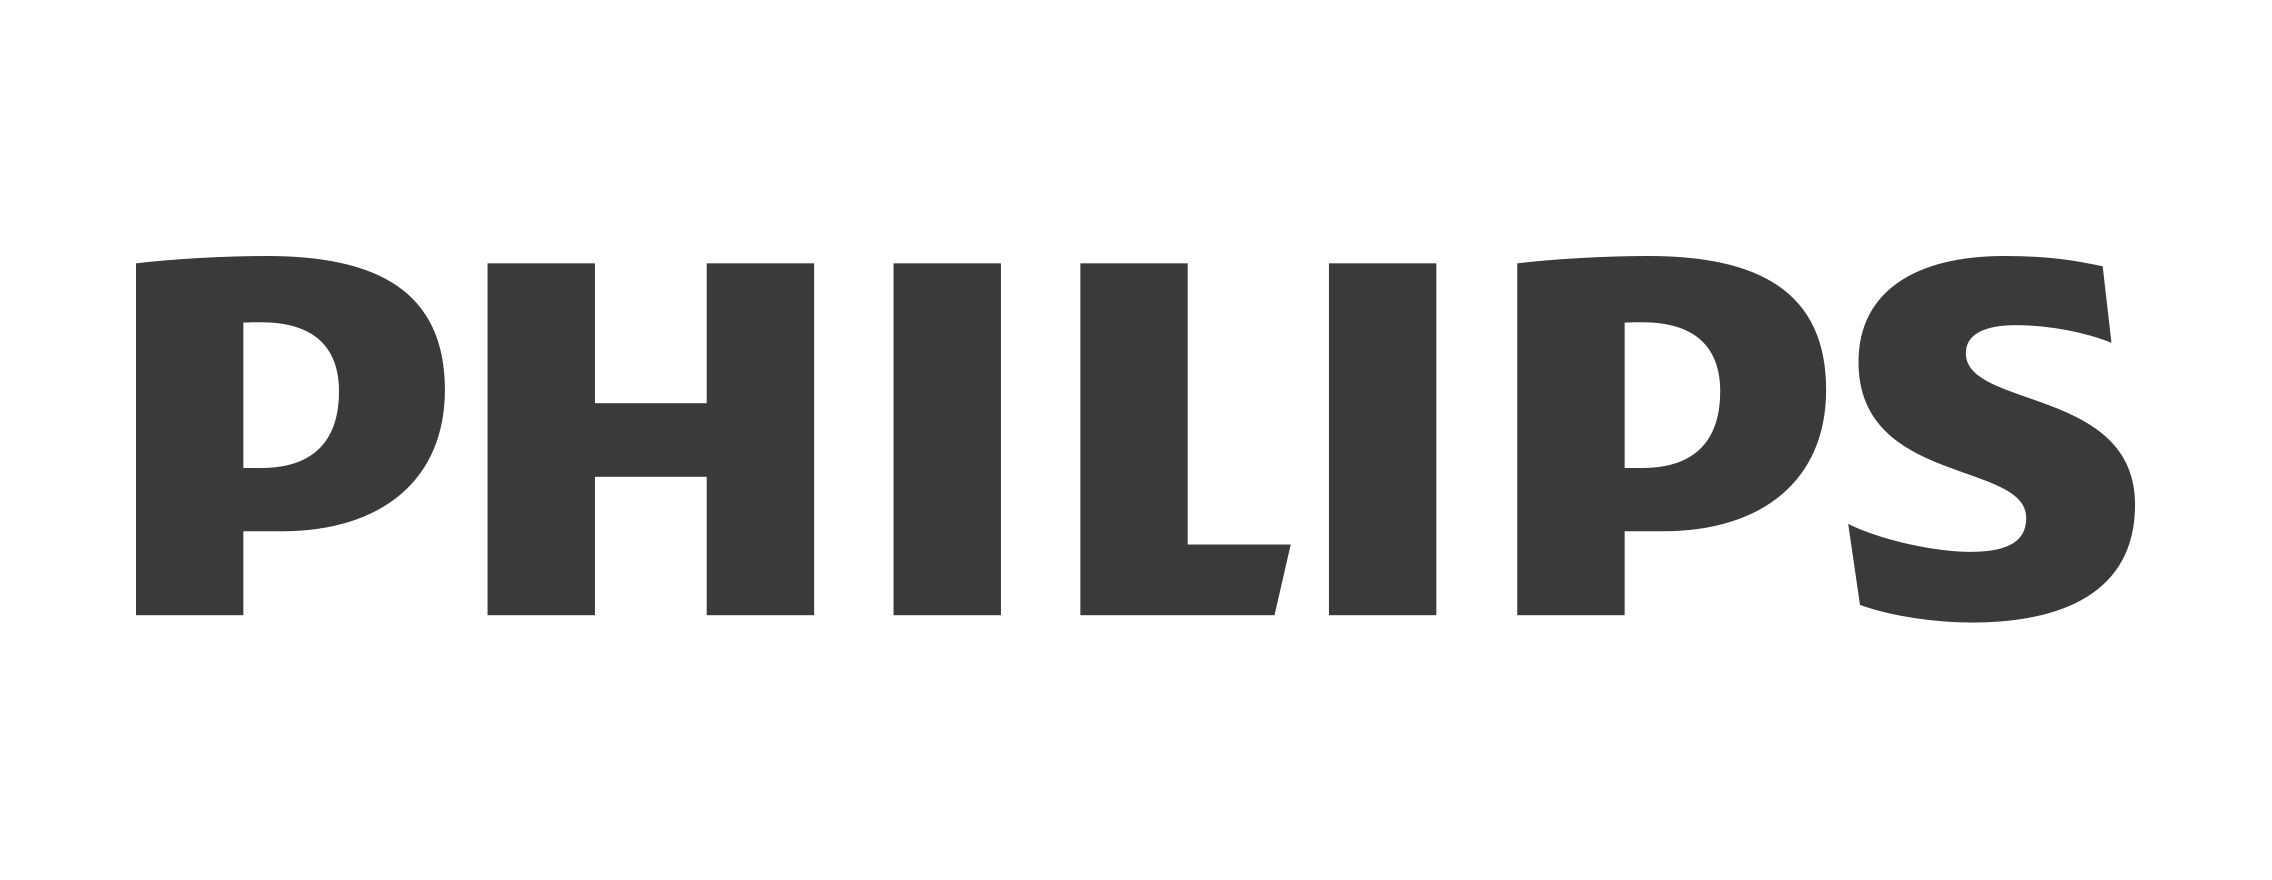 Philips бренд. Фирменный знак Philips. Производитель логотип Philips.